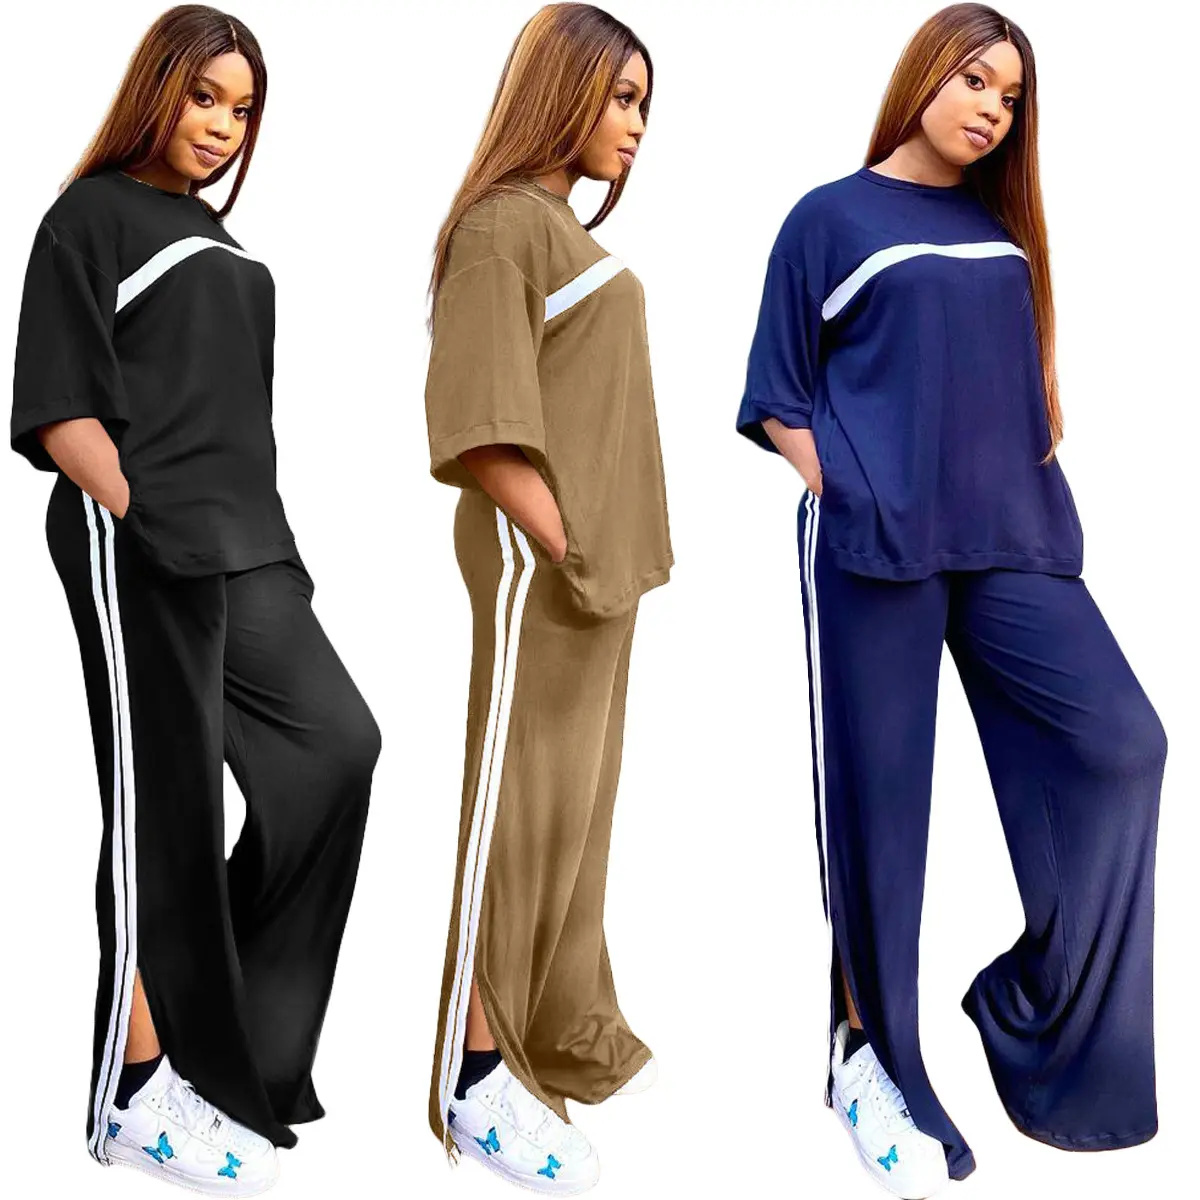 Women's leisure sports split stitching set Shirt Women Two Piece Sets 2021 Wide Leg Pants Suit Women 2 Piece Set Clothing